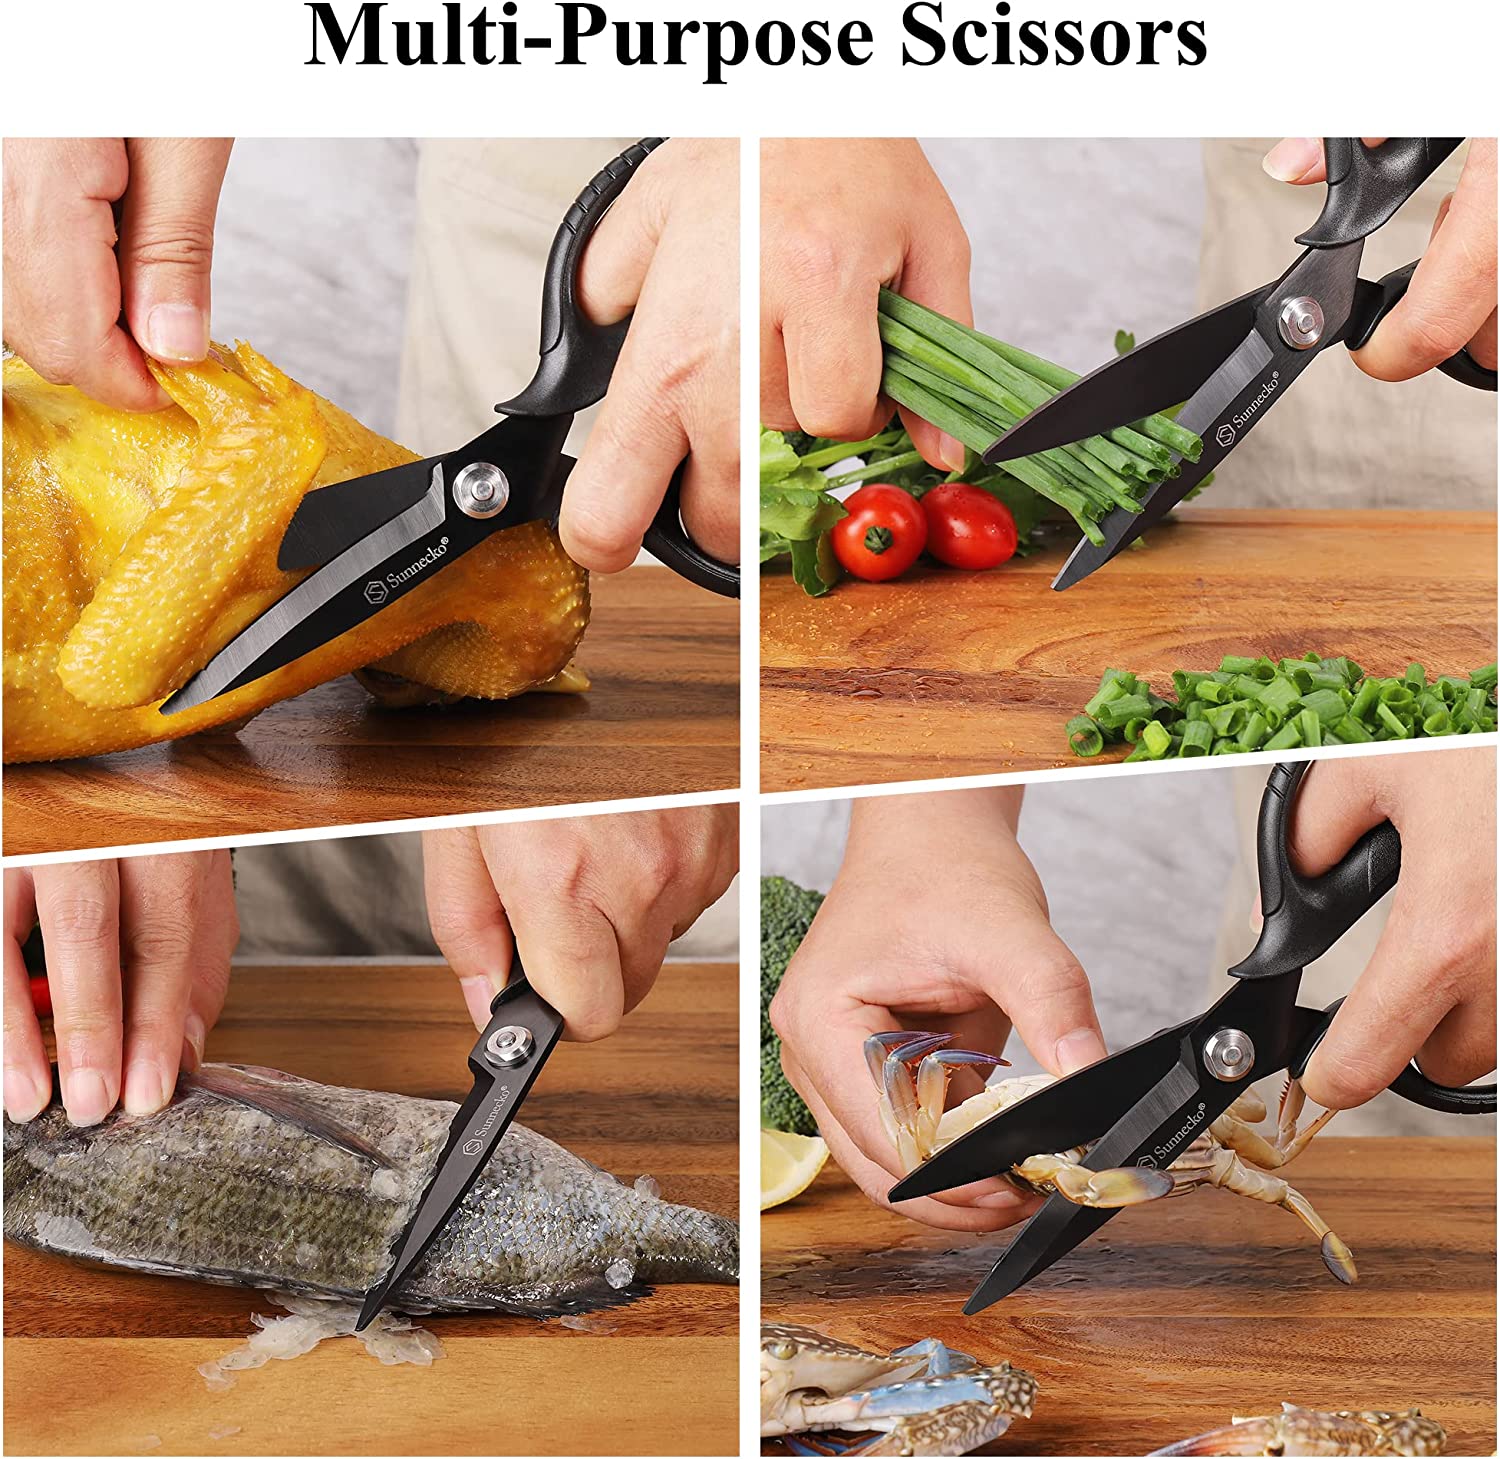 Multi-purpose kitchen shears